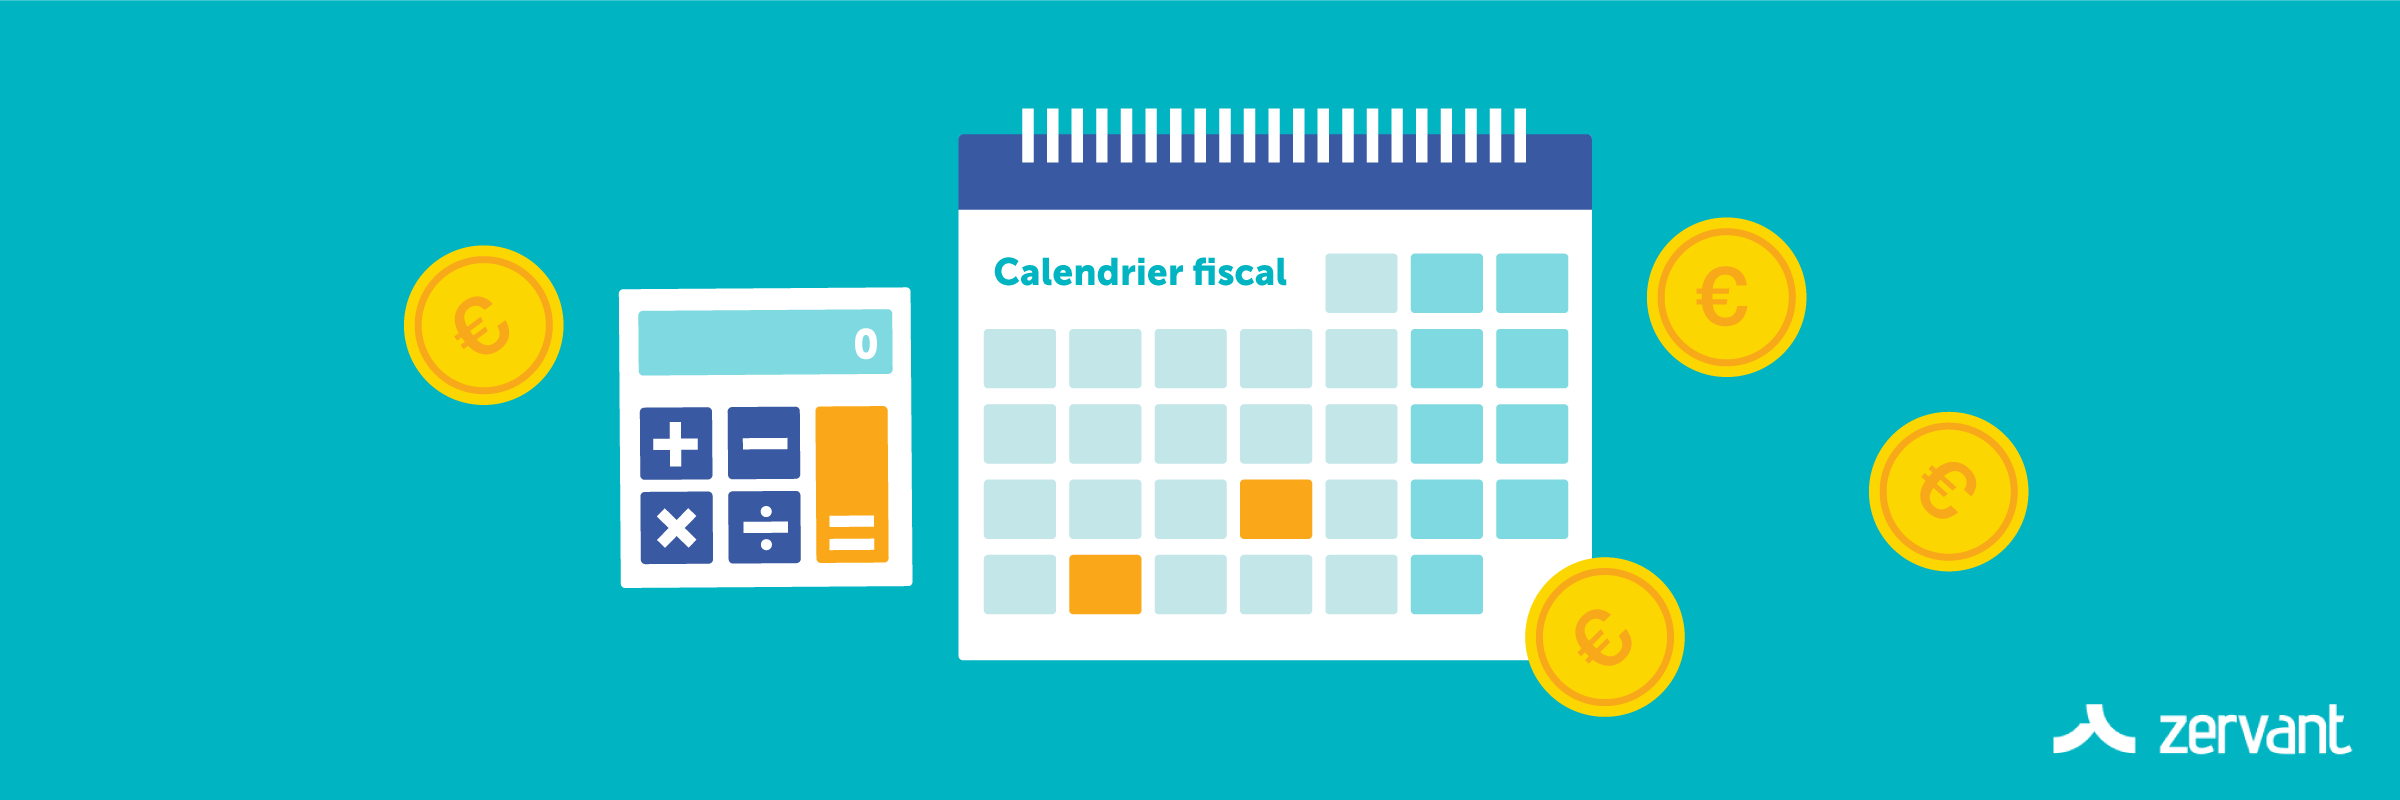 calendrier_fiscal_entreprise